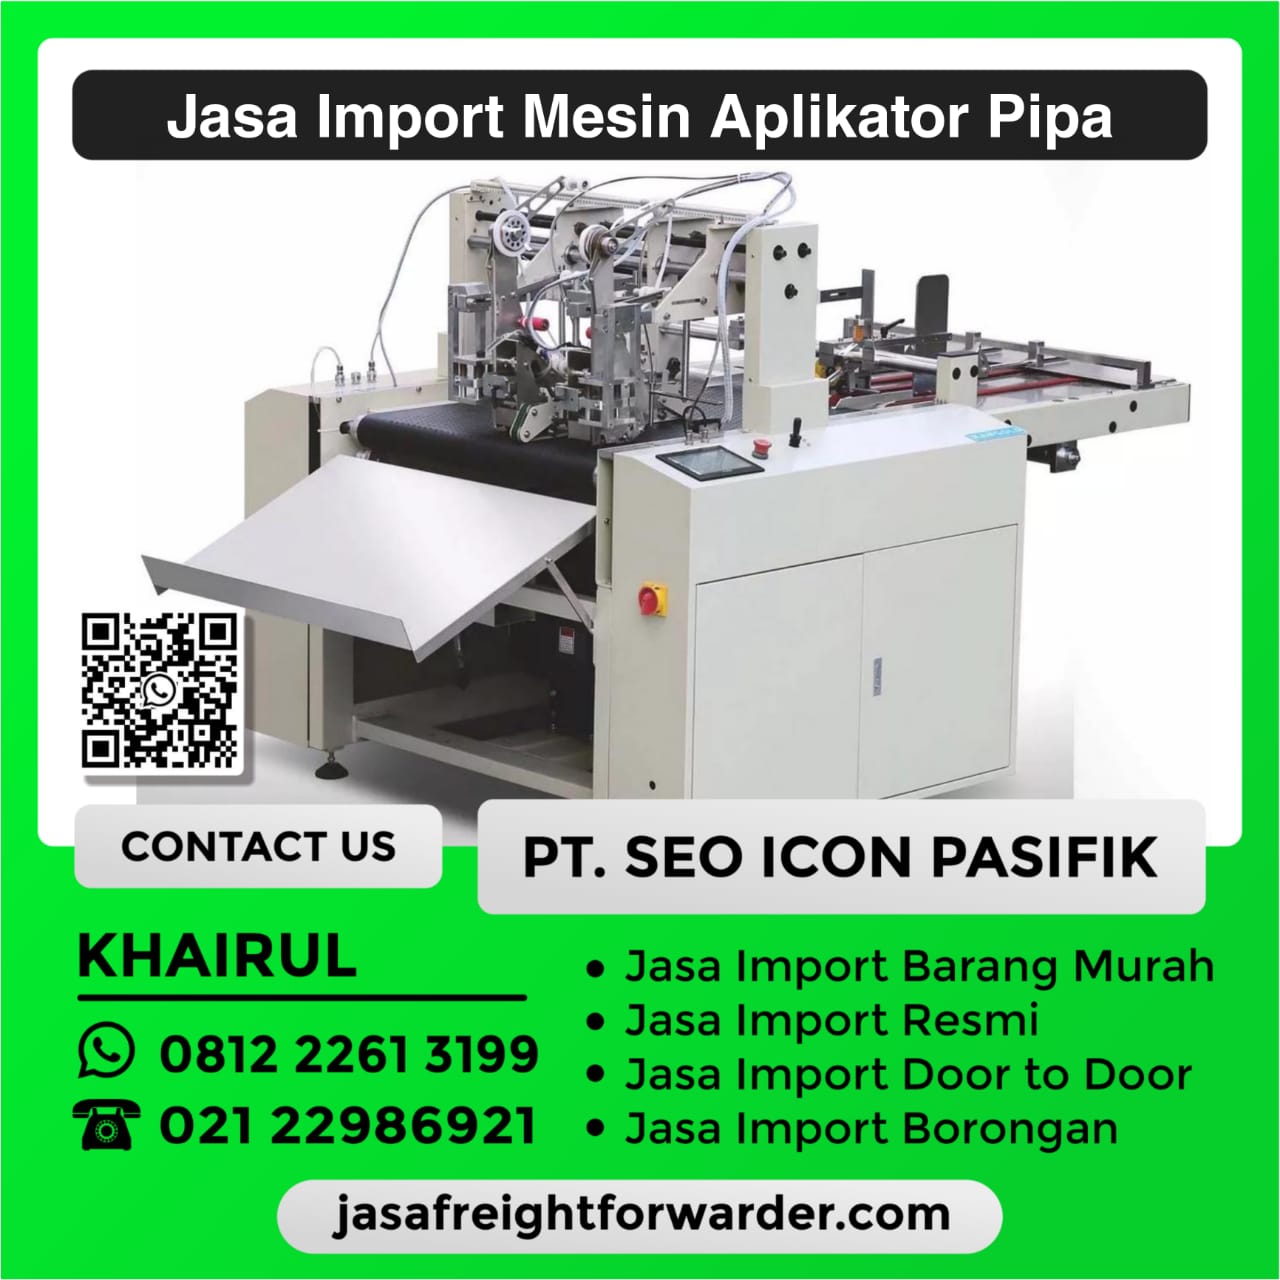 Jasa-Import-Mesin-Aplikator-Pipa.jpeg